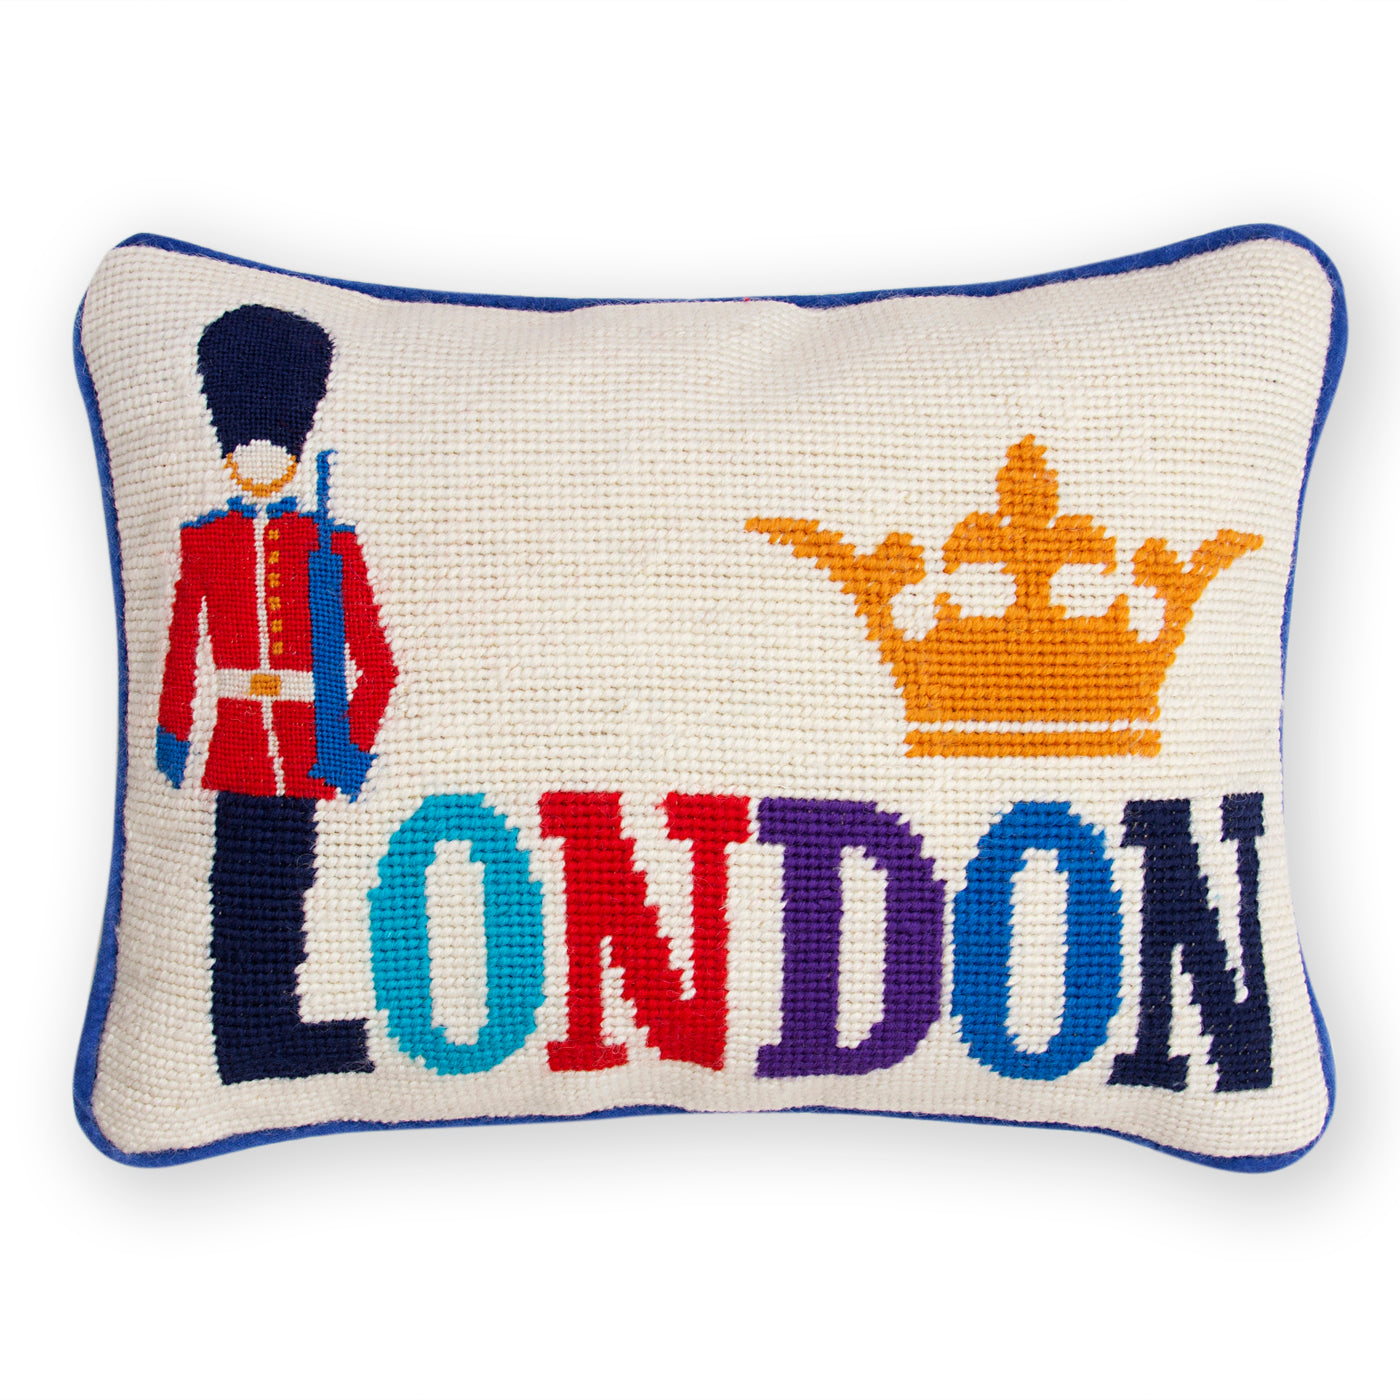 London Needlepoint Throw Cushion